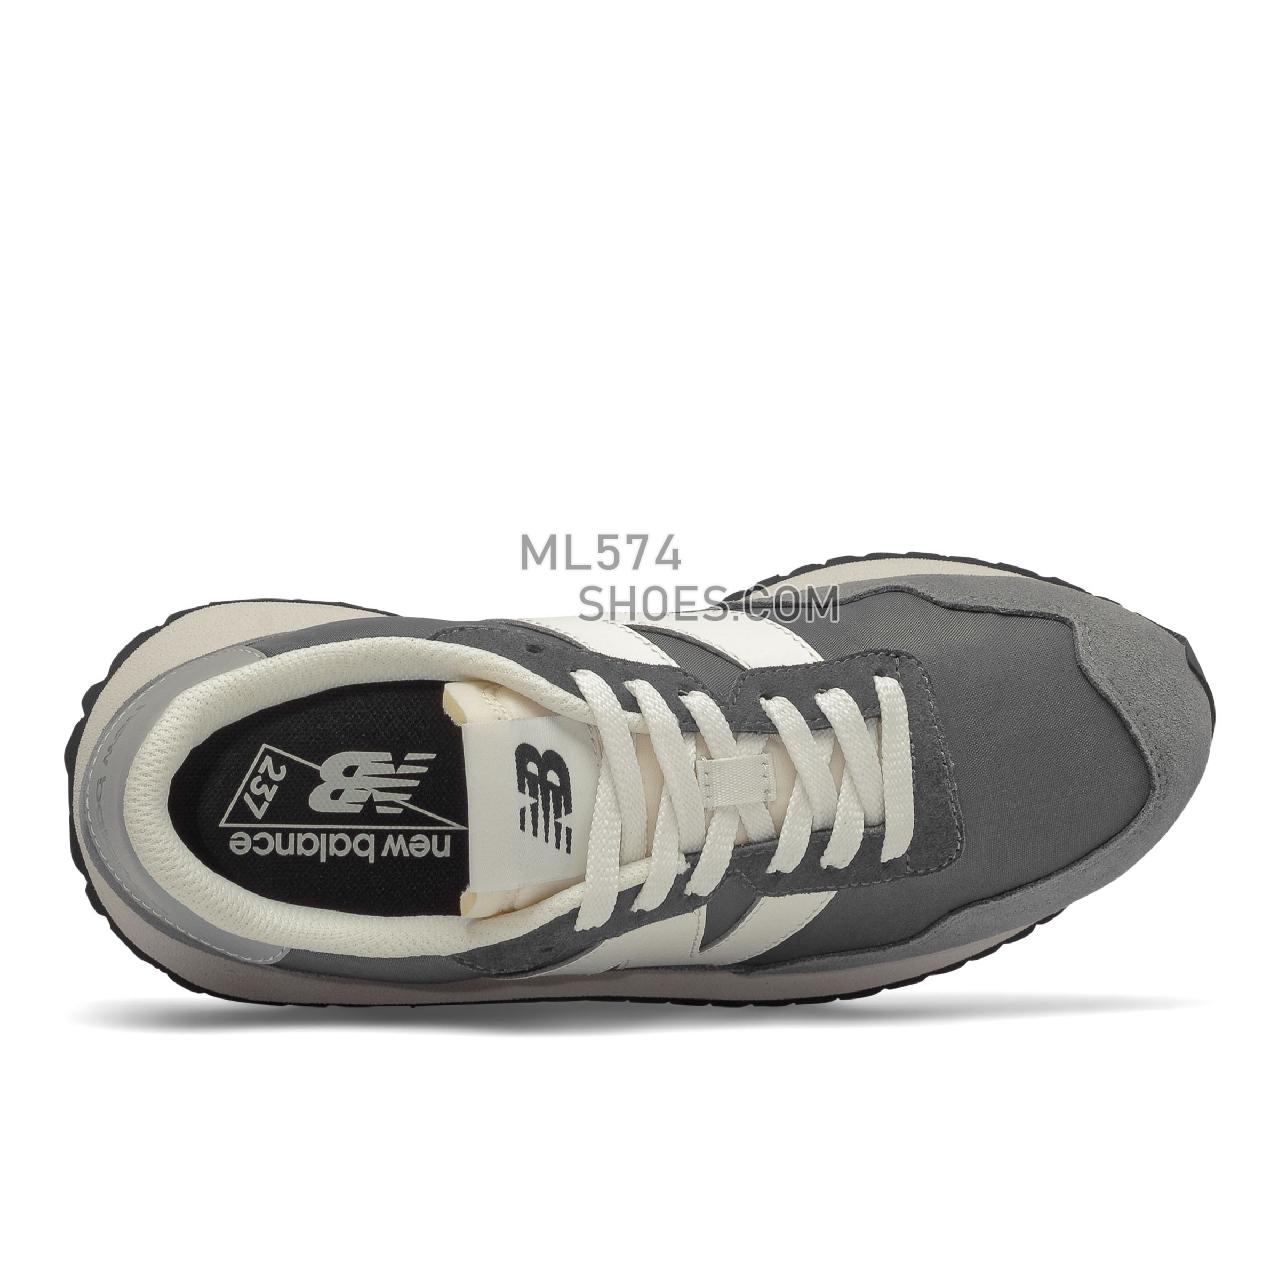 New Balance 237 - Women's Sport Style Sneakers - Magnet with Castlerock - WS237DG1